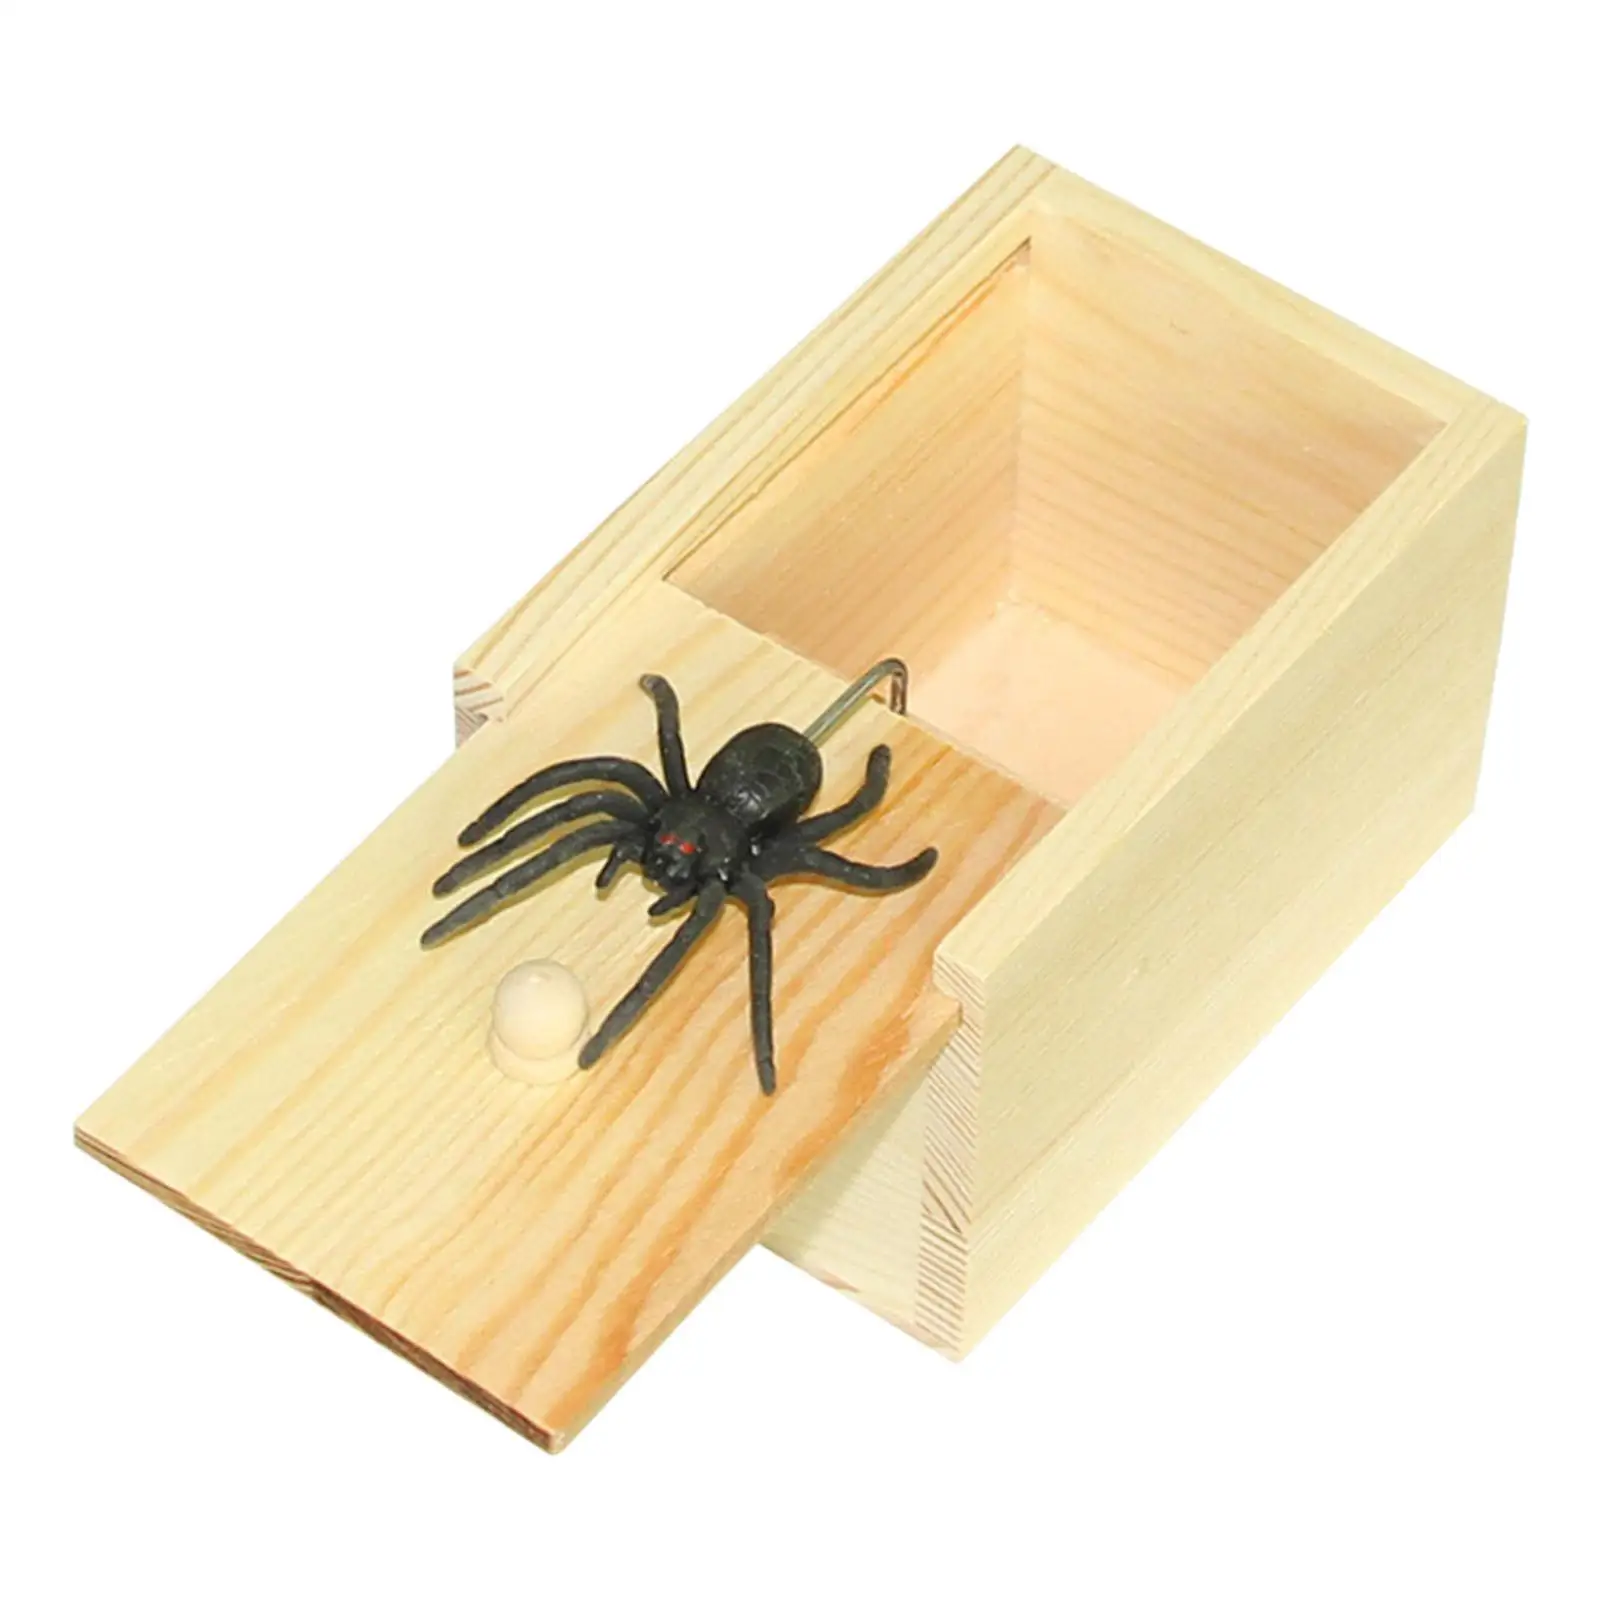 Handmade Fun Practical Joke Boxes Practical Joke Toys Spider Prank Scare Box for Adults Carnivals